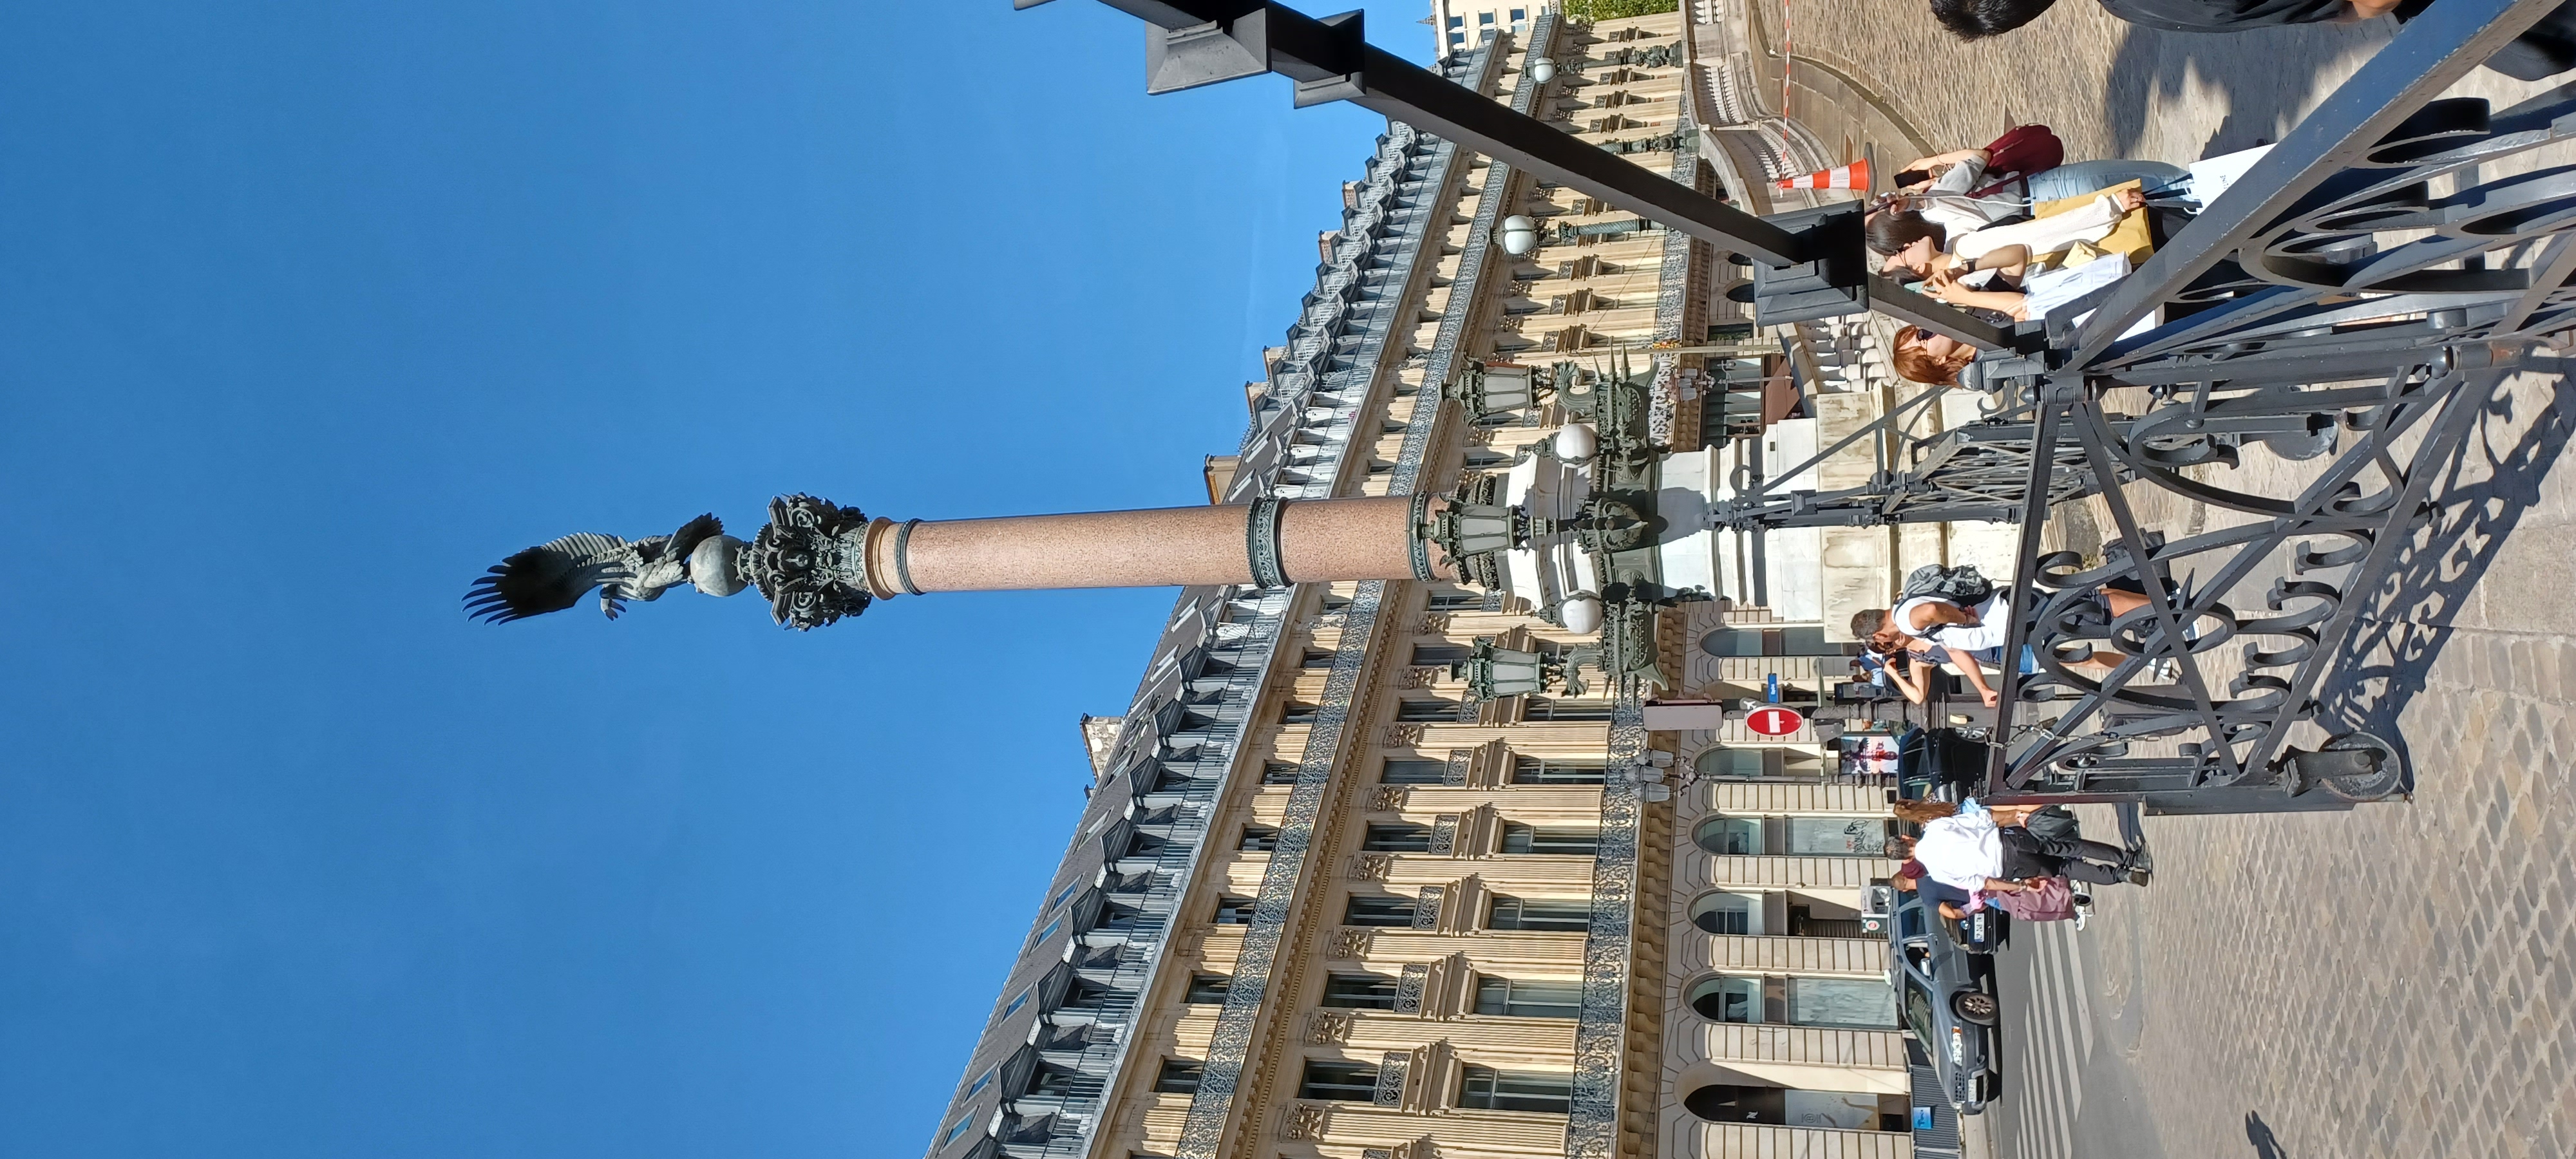 The Palais Garnier also houses the Paris Opera Library-Museum